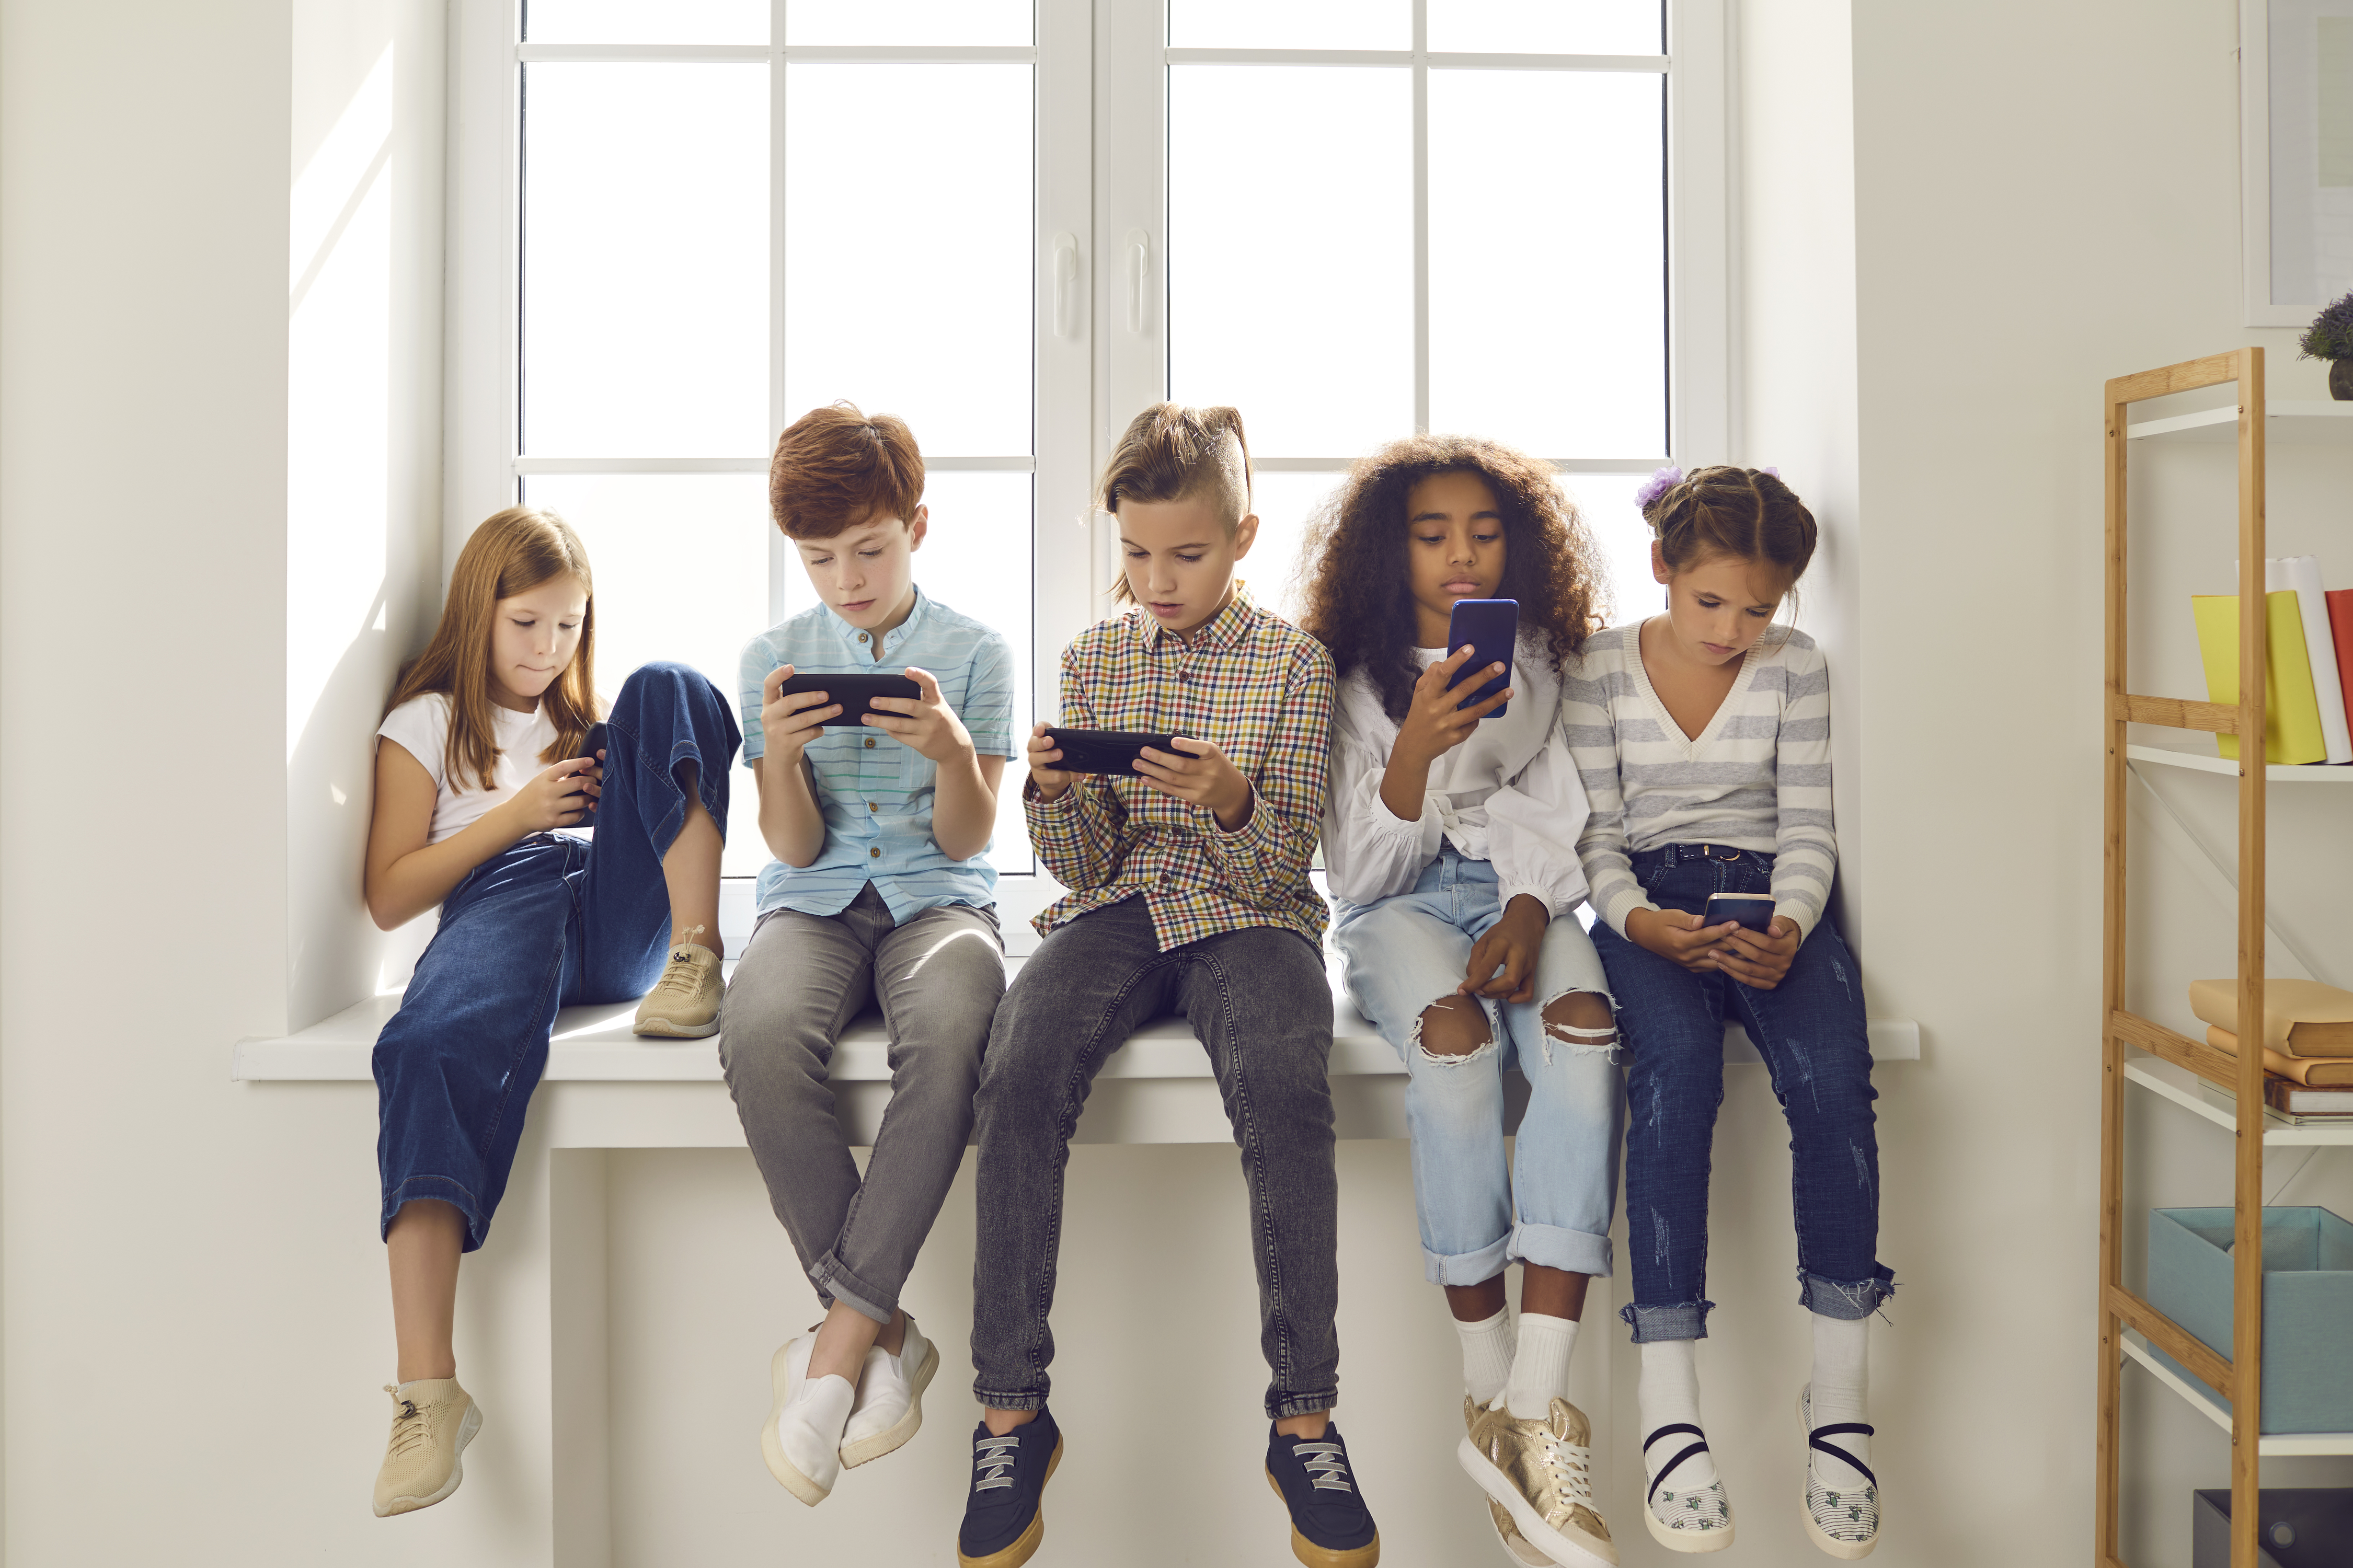 Study: Too much social media impacts teenage brain development